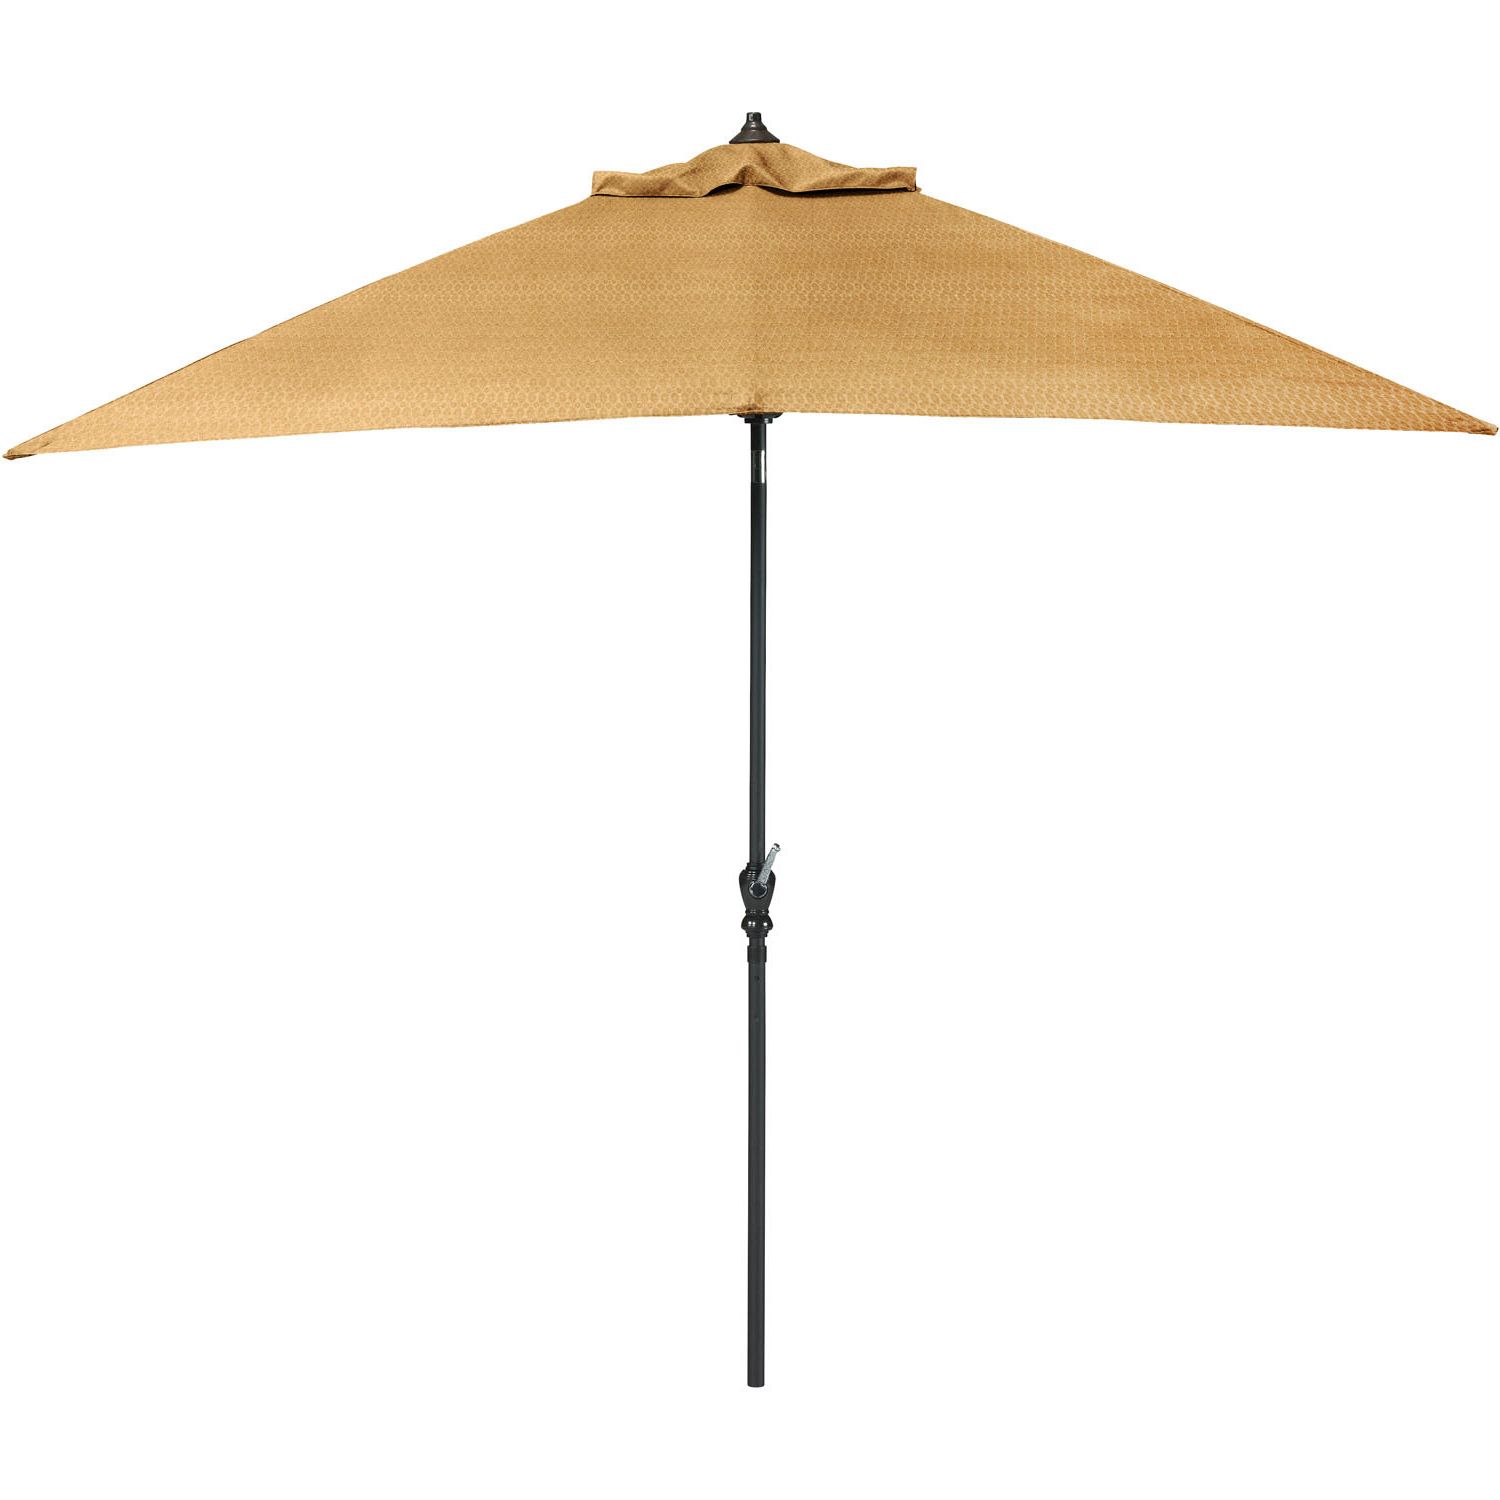 Caravelle Market Sunbrella Umbrellas With Regard To Preferred Sweeten 9' Market Umbrella (View 16 of 20)